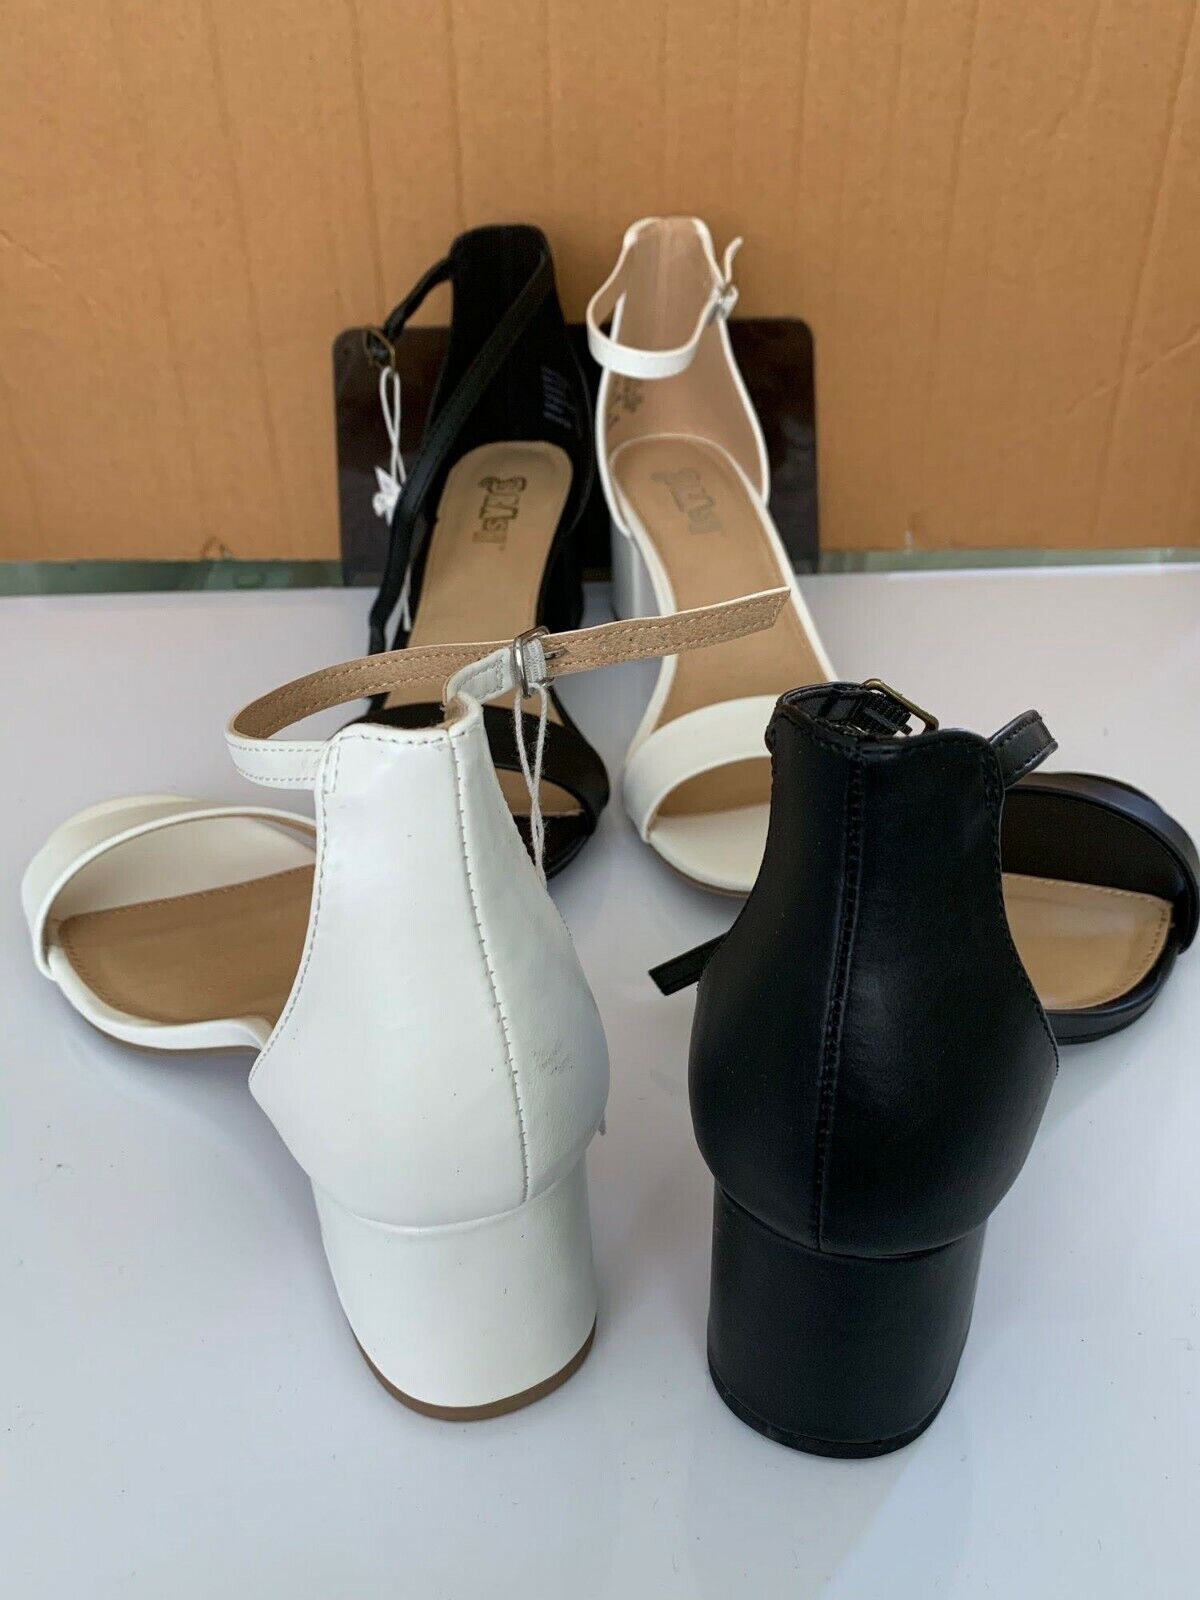 NEW Brash Women's Shoes Black Sz 7.5